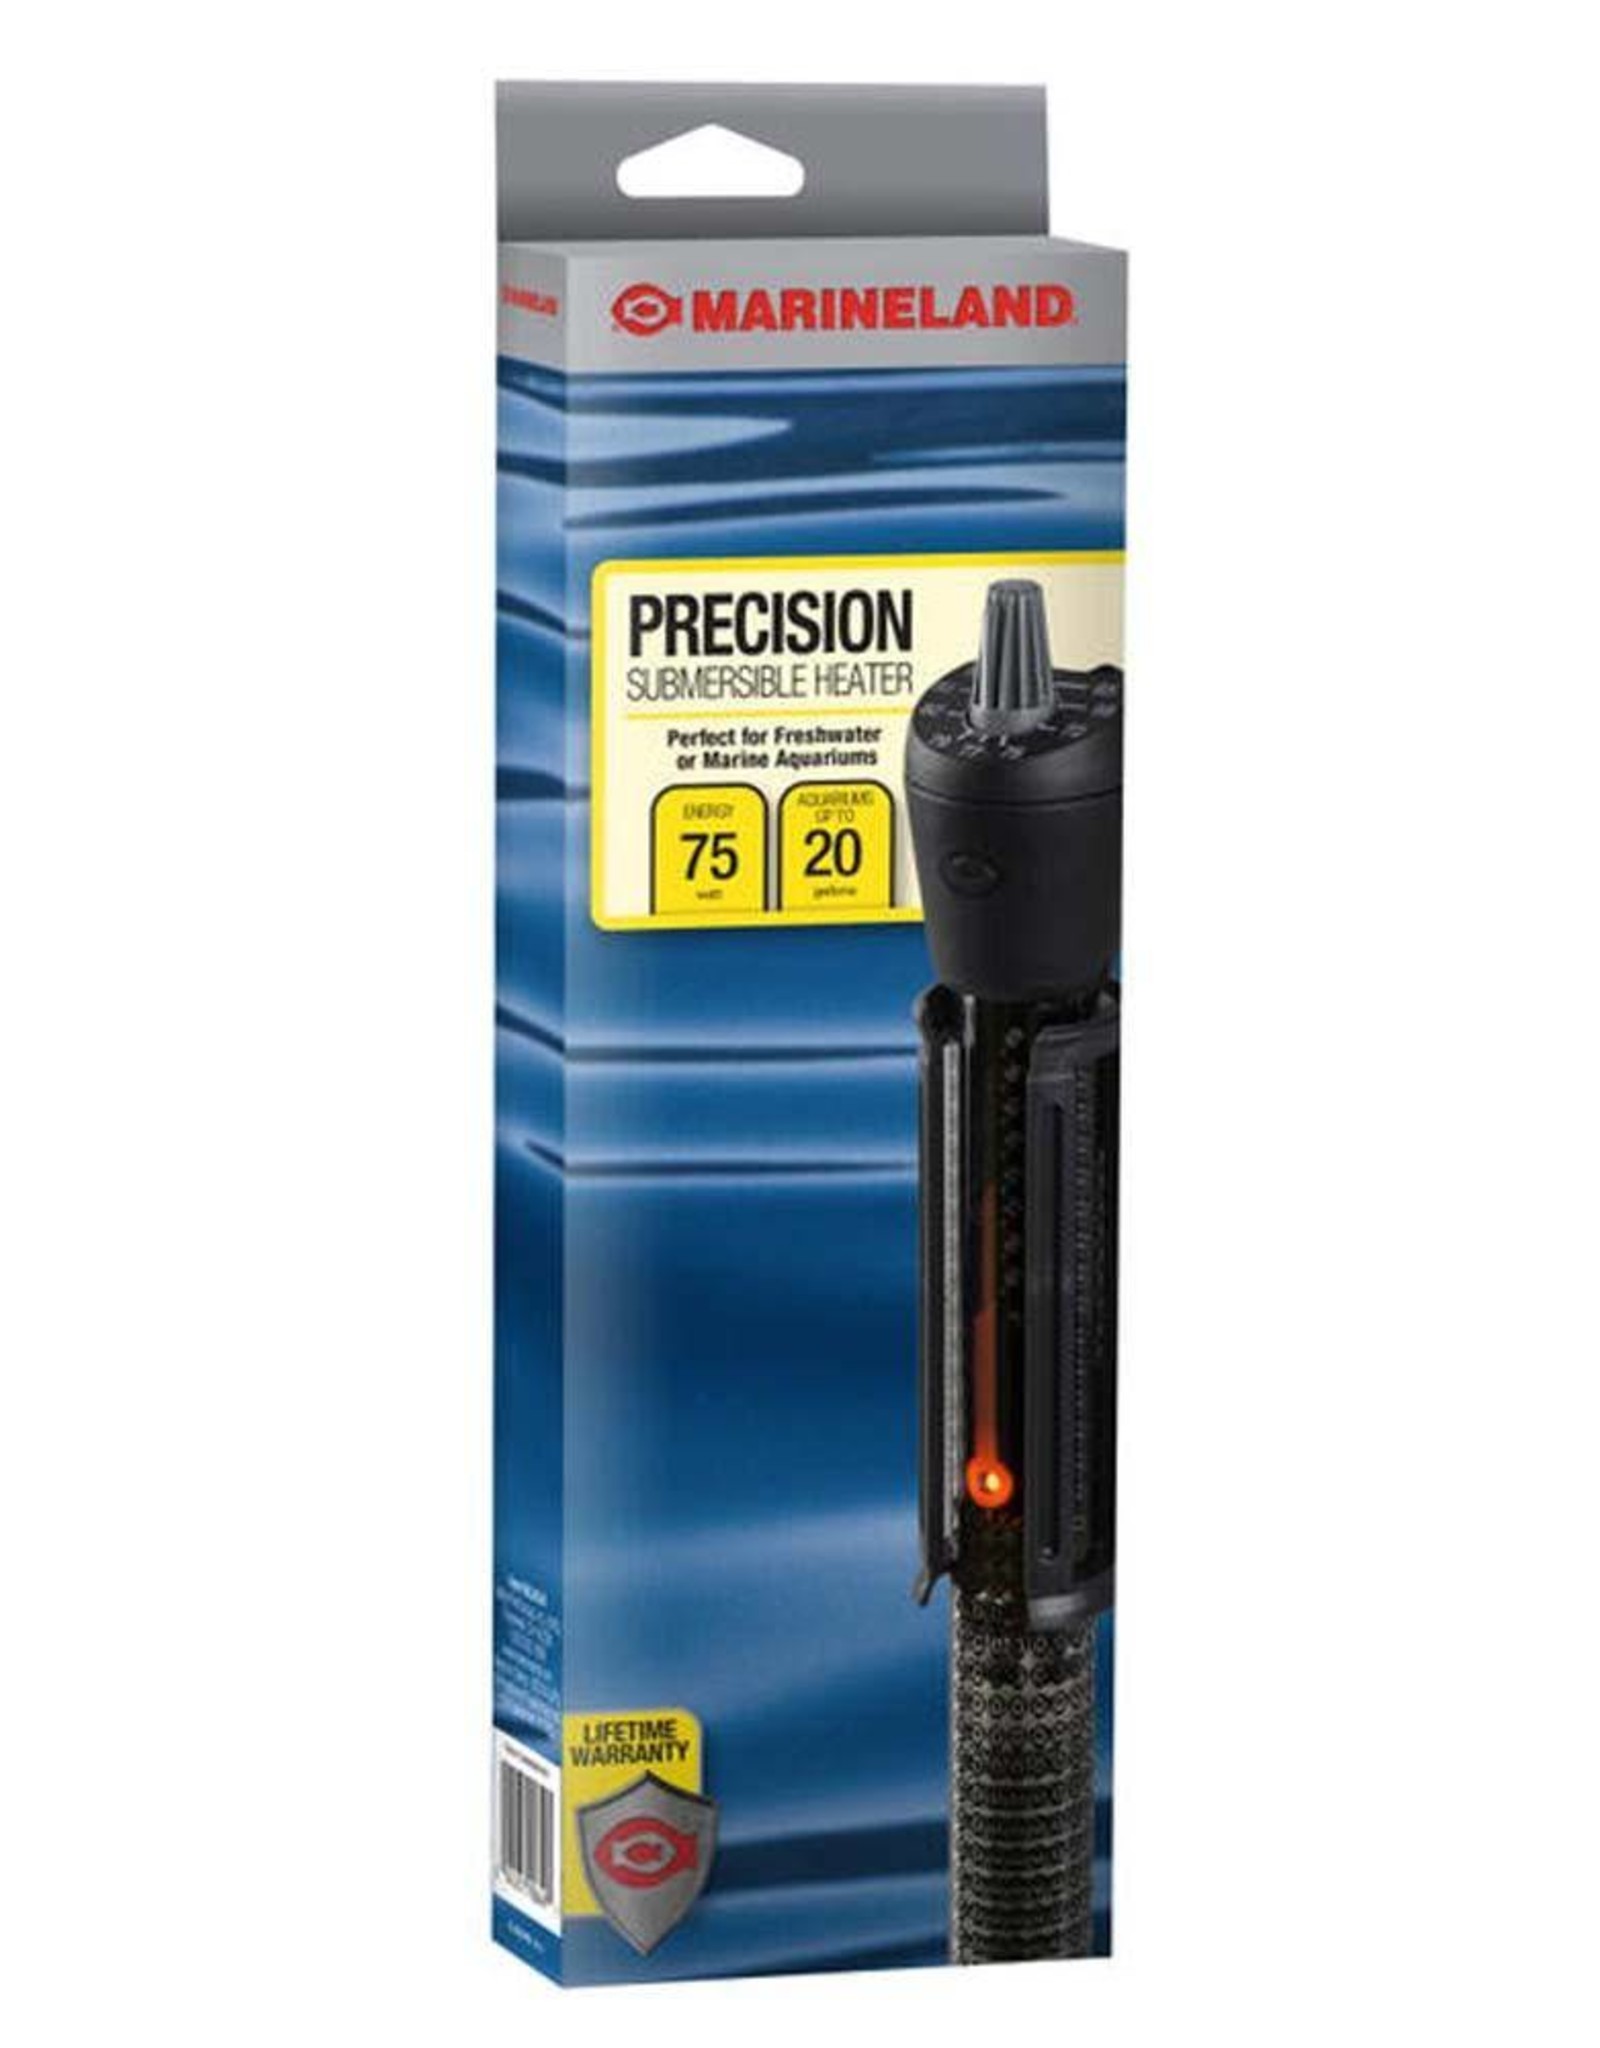 MARINELAND AQA Marineland Precision 75 Watt Submersible Heater